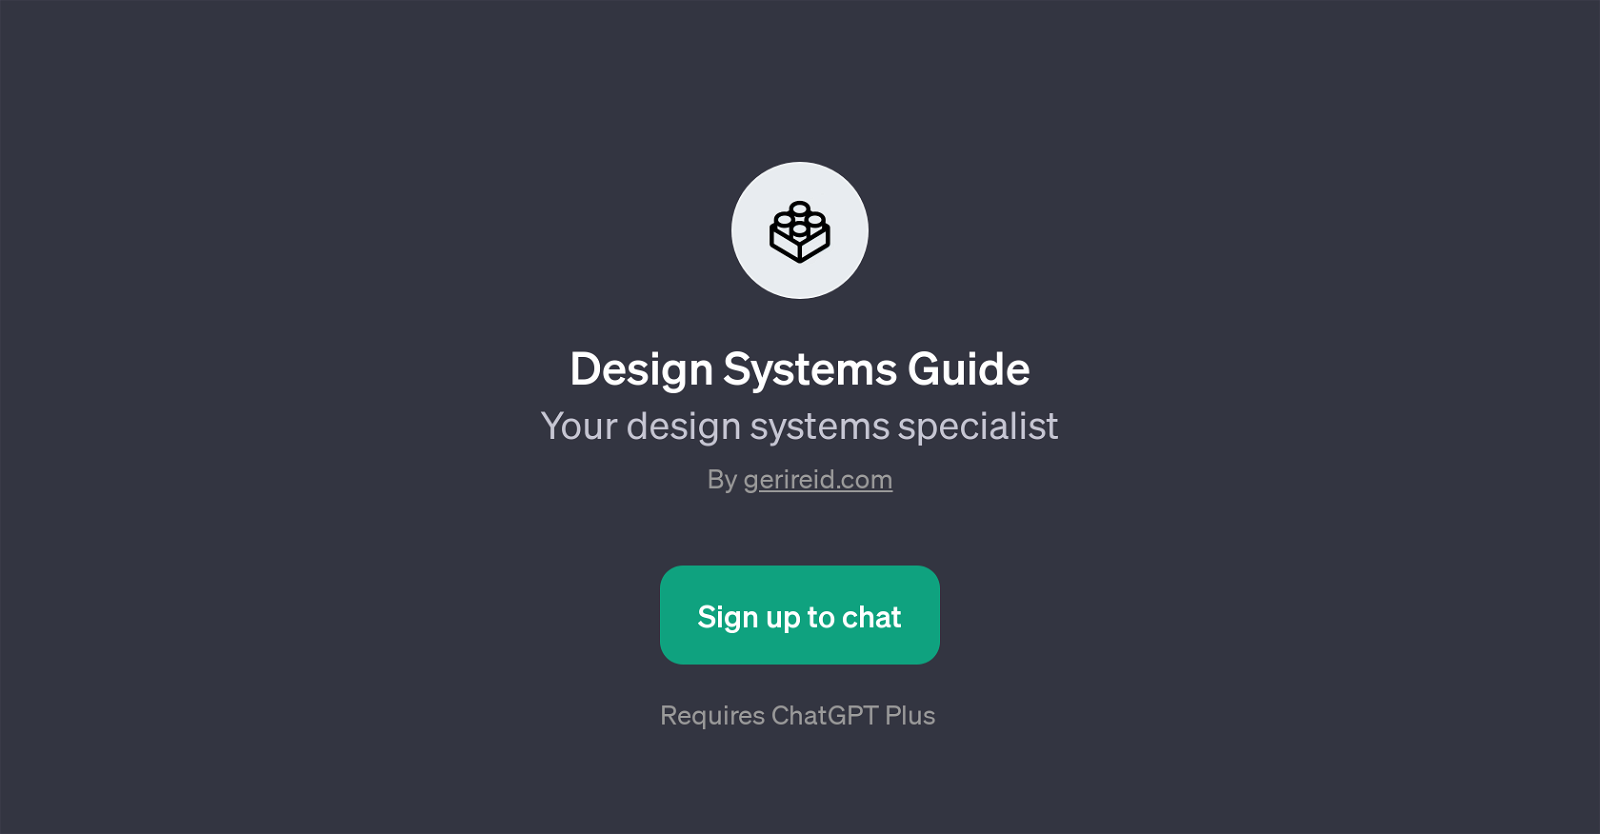 Design Systems Guide website